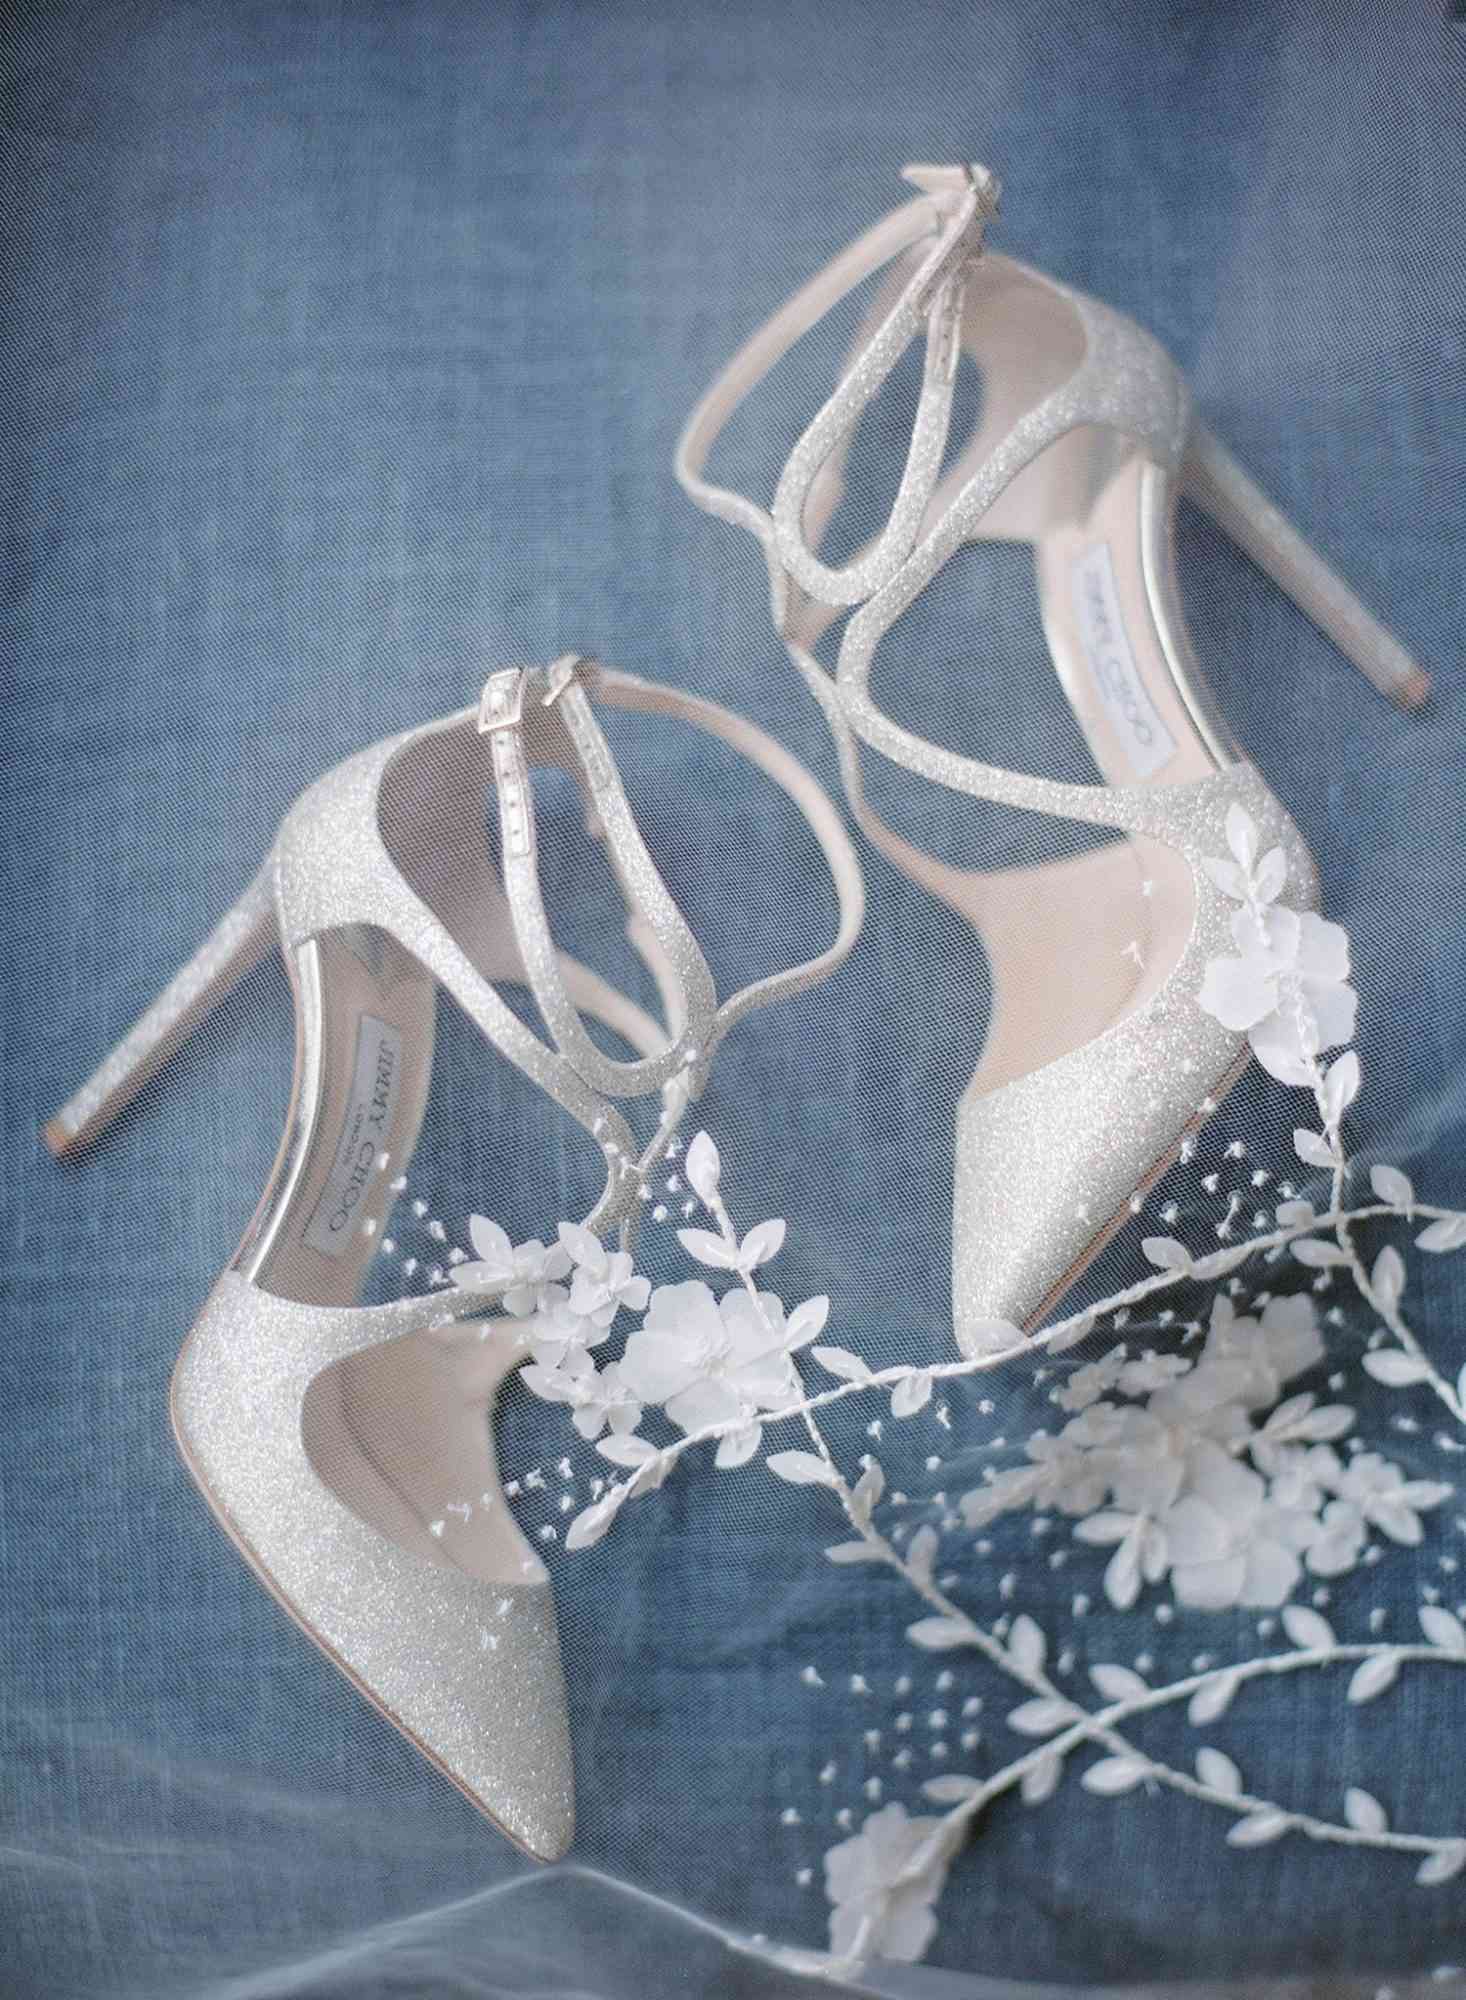 sloan scott wedding white shoes on blue background